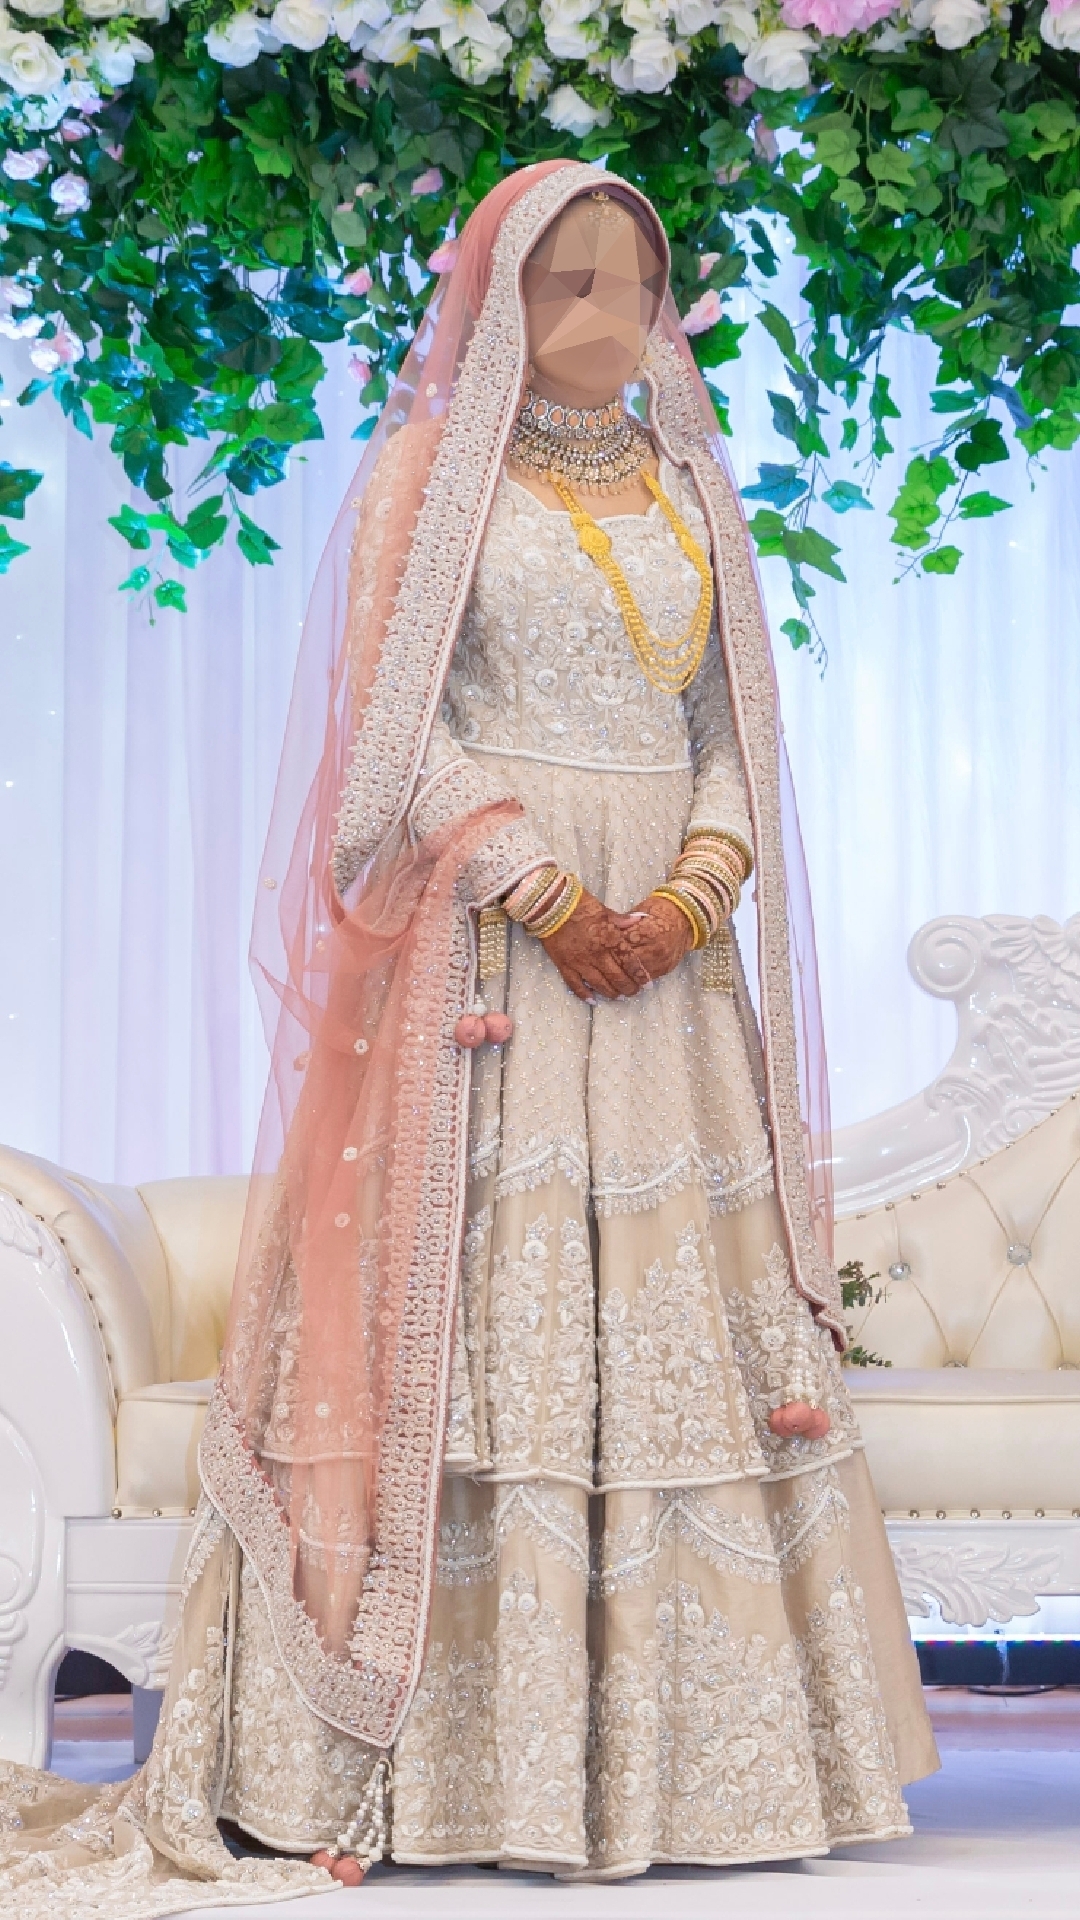 Ivory and blush pink Indian bridal wedding lengha dress